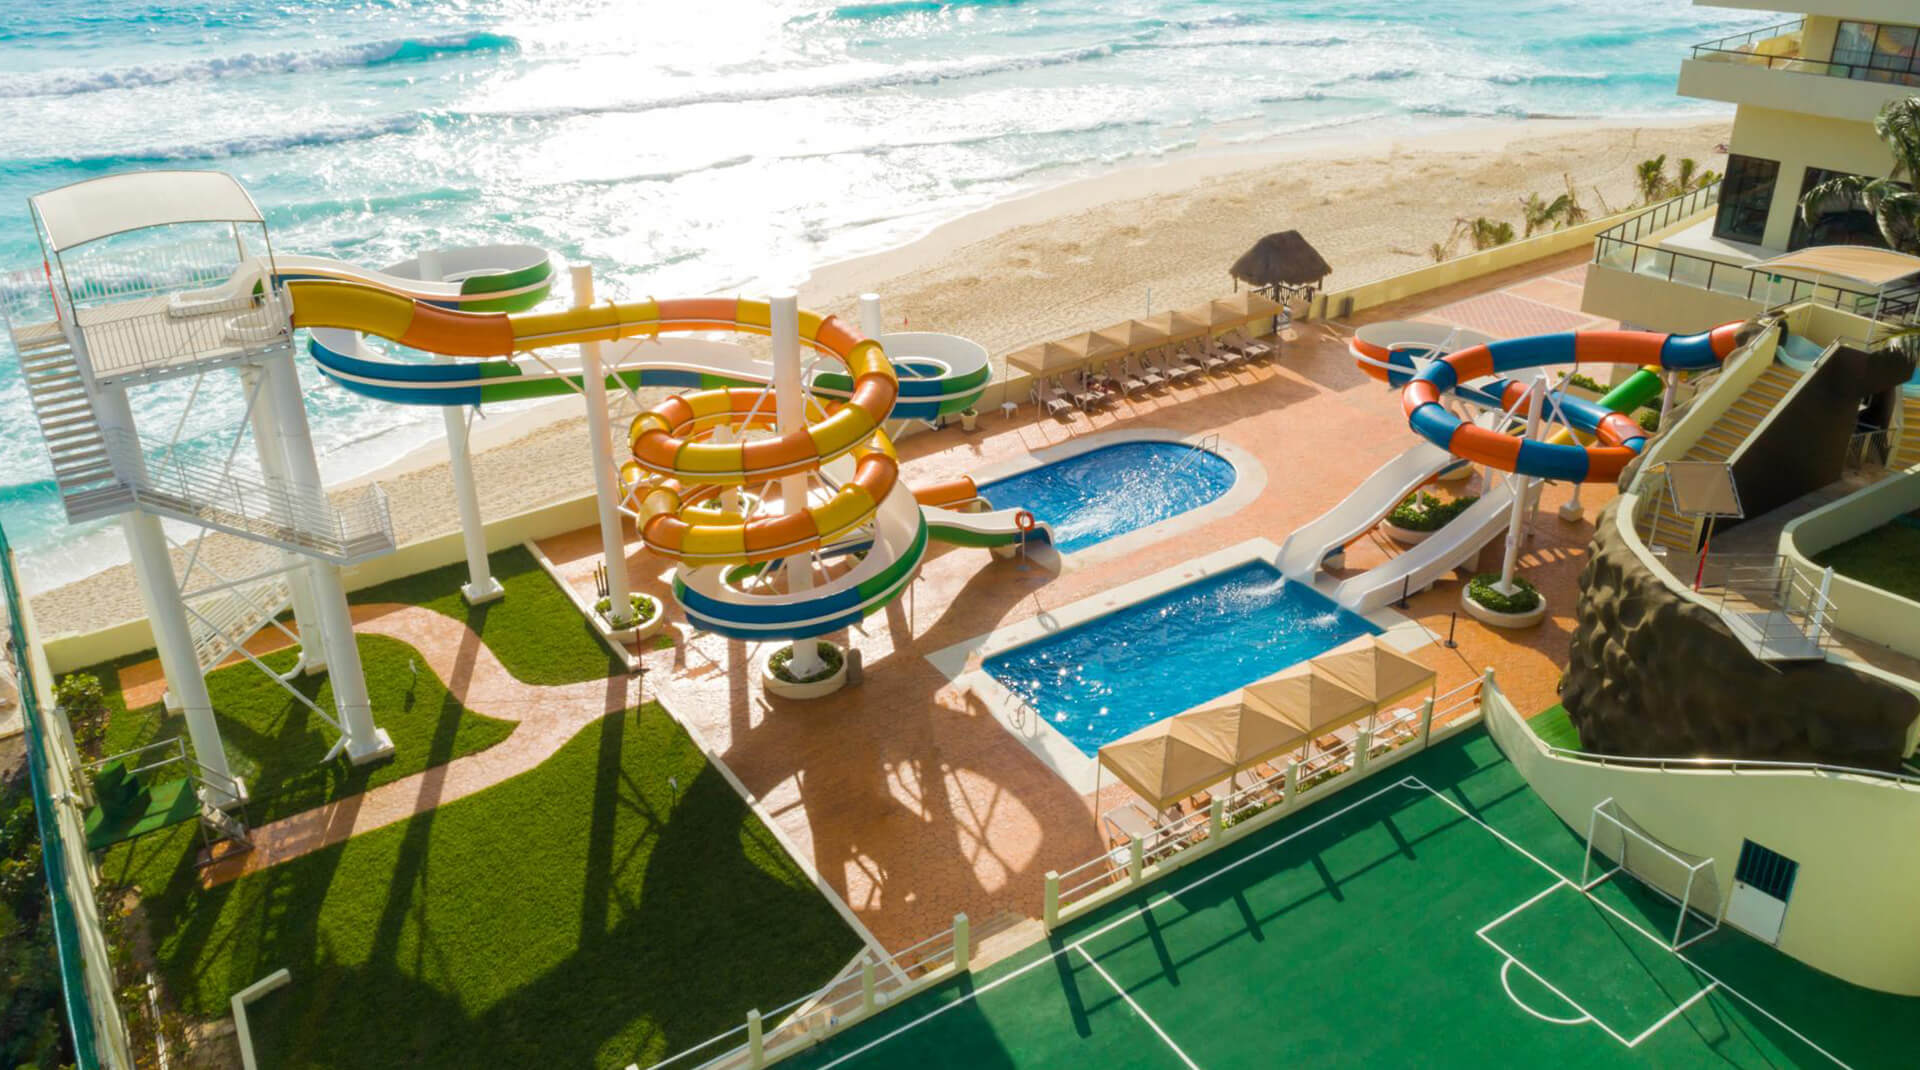 Crown Paradise Club Cancun - all inclusive hotels cancun mexico